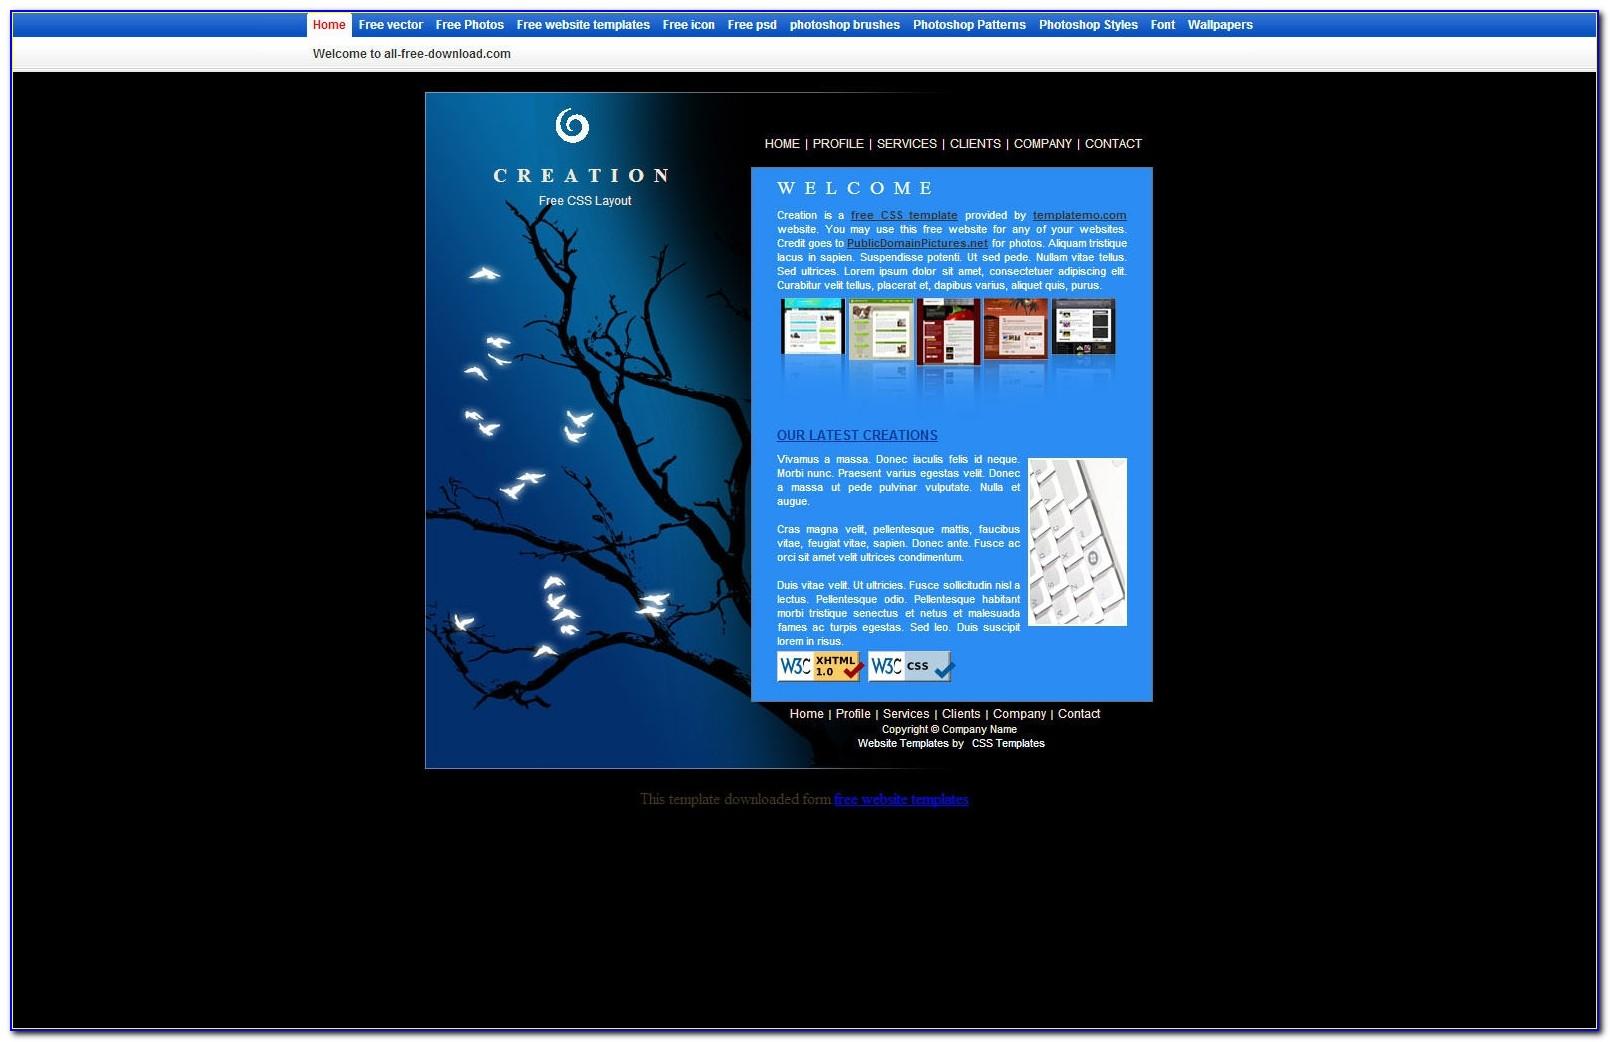 Website Template Dreamweaver Free